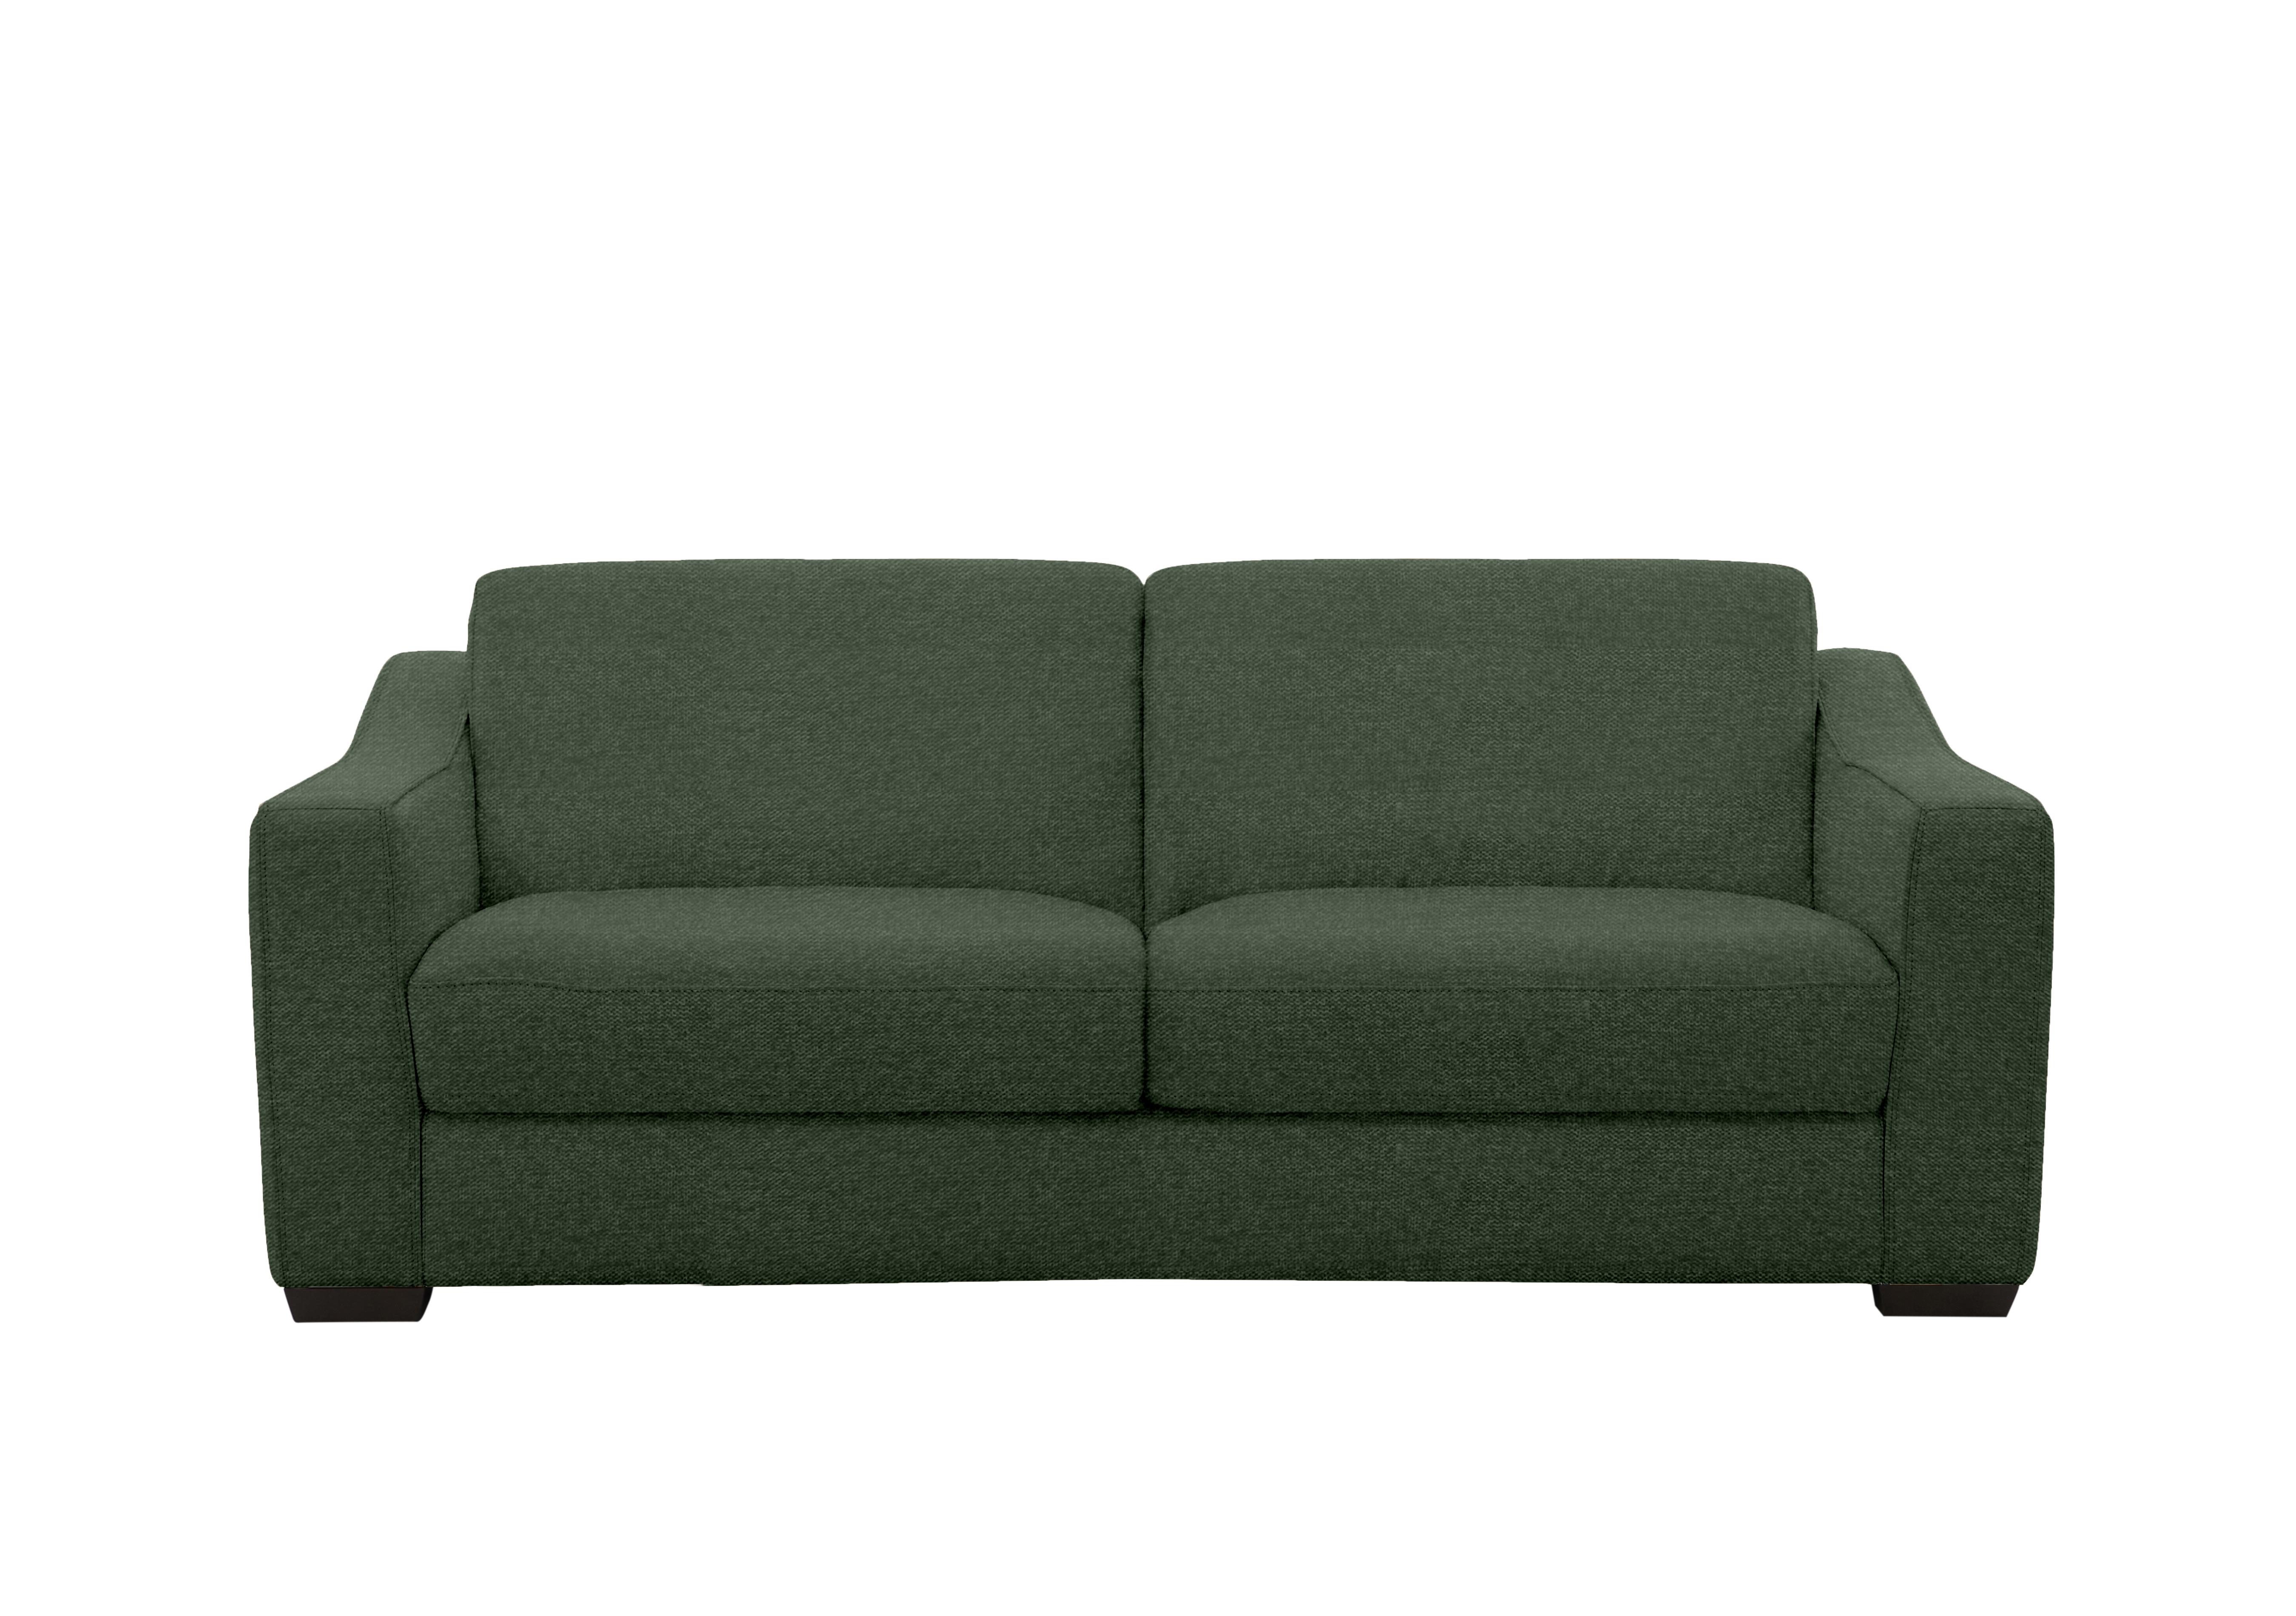 Optimus Space Saving Fabric Sofa Bed with Memory Foam Mattress in Fab-Ska-R48 Moss Green on Furniture Village